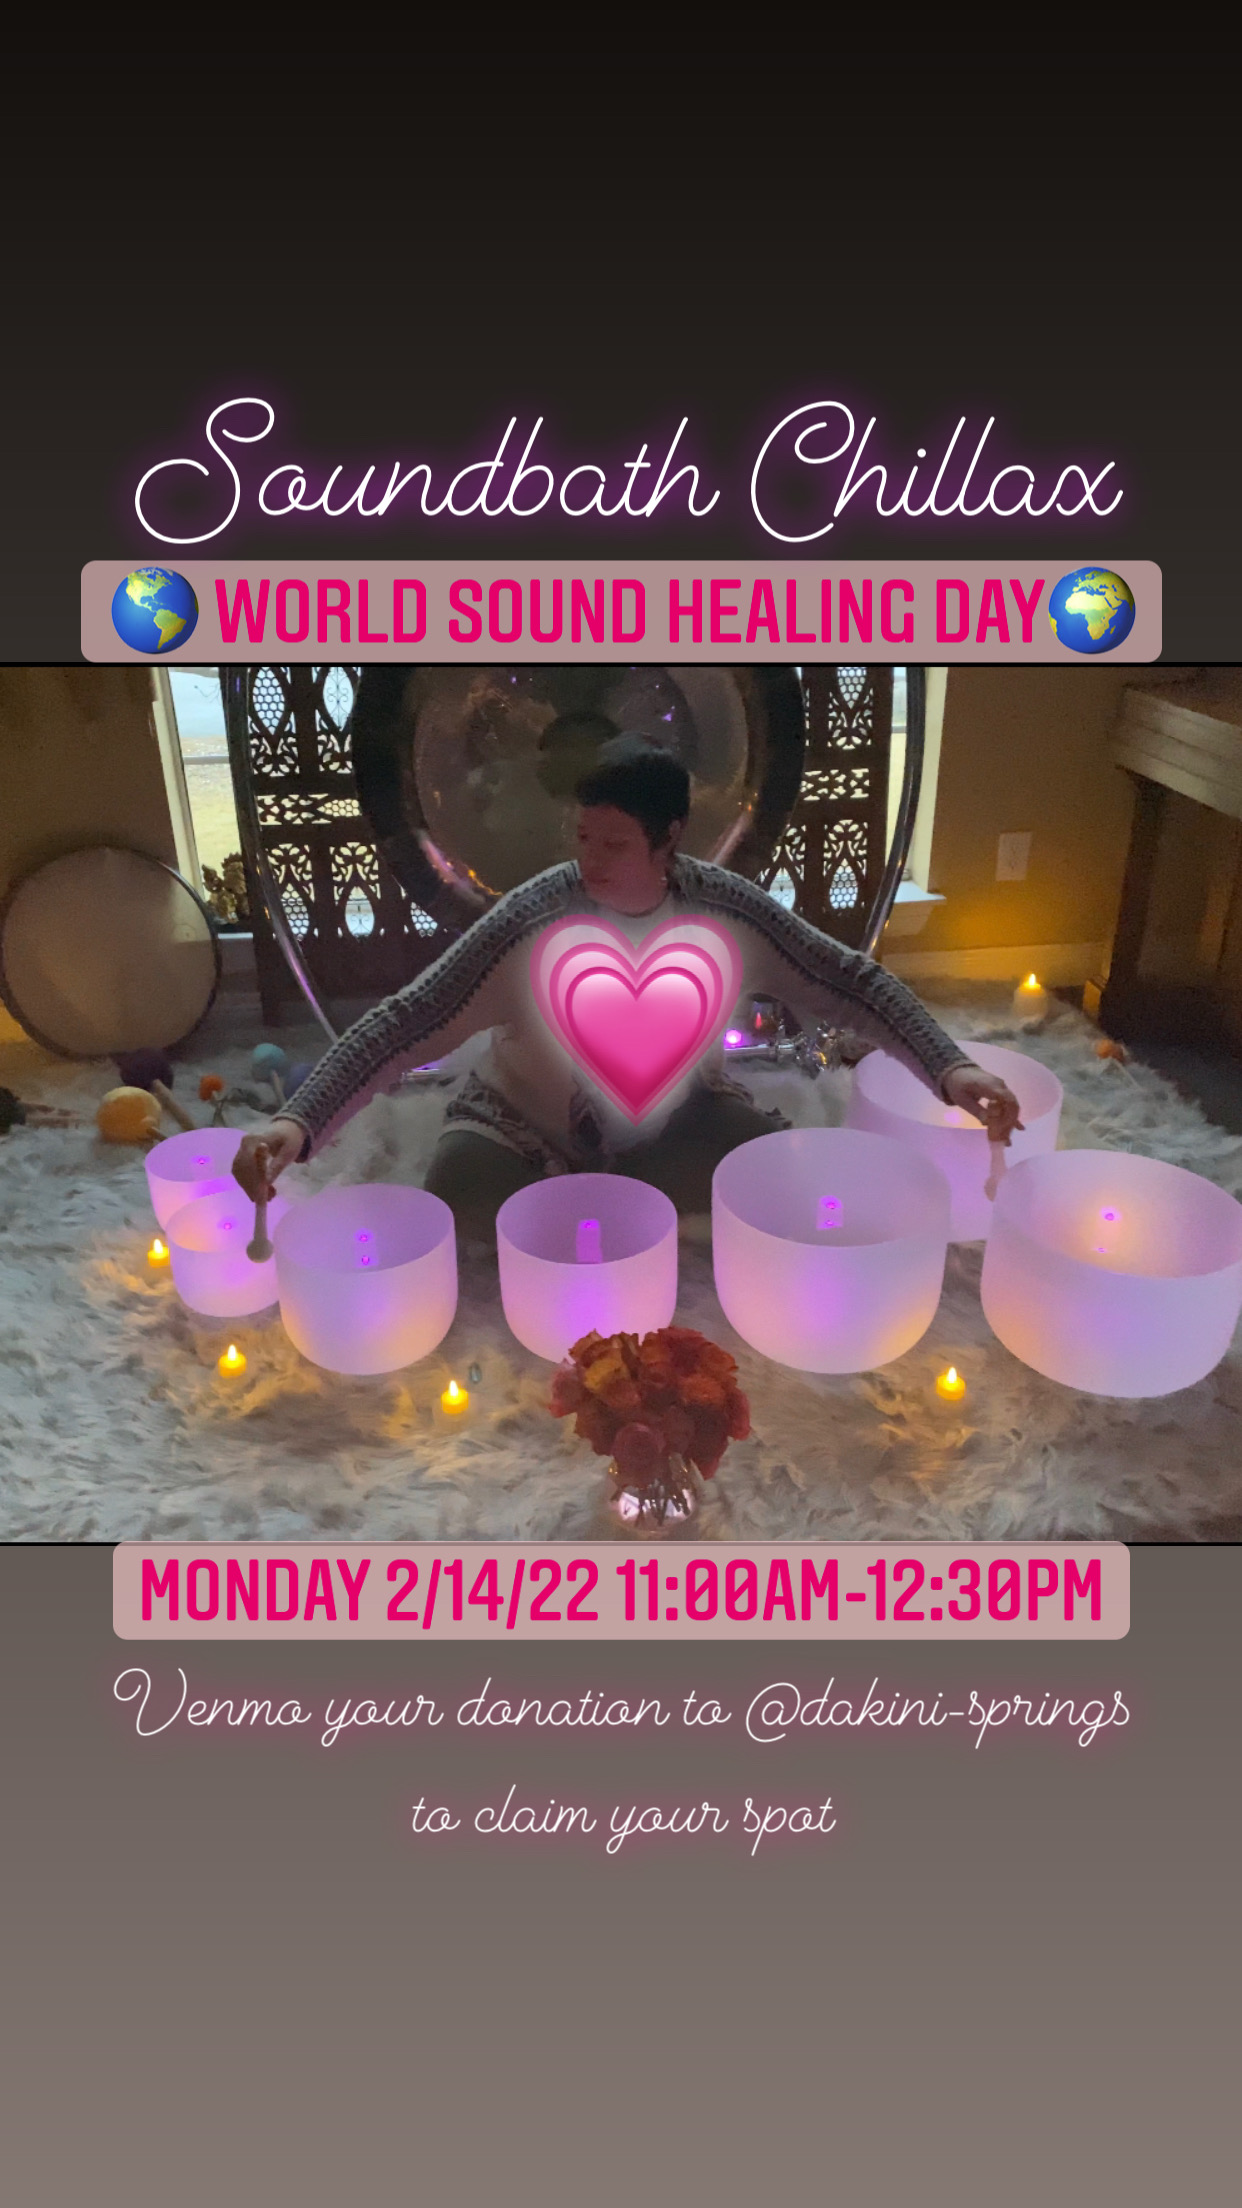 Soundbath Chillax for World Sound Healing Day